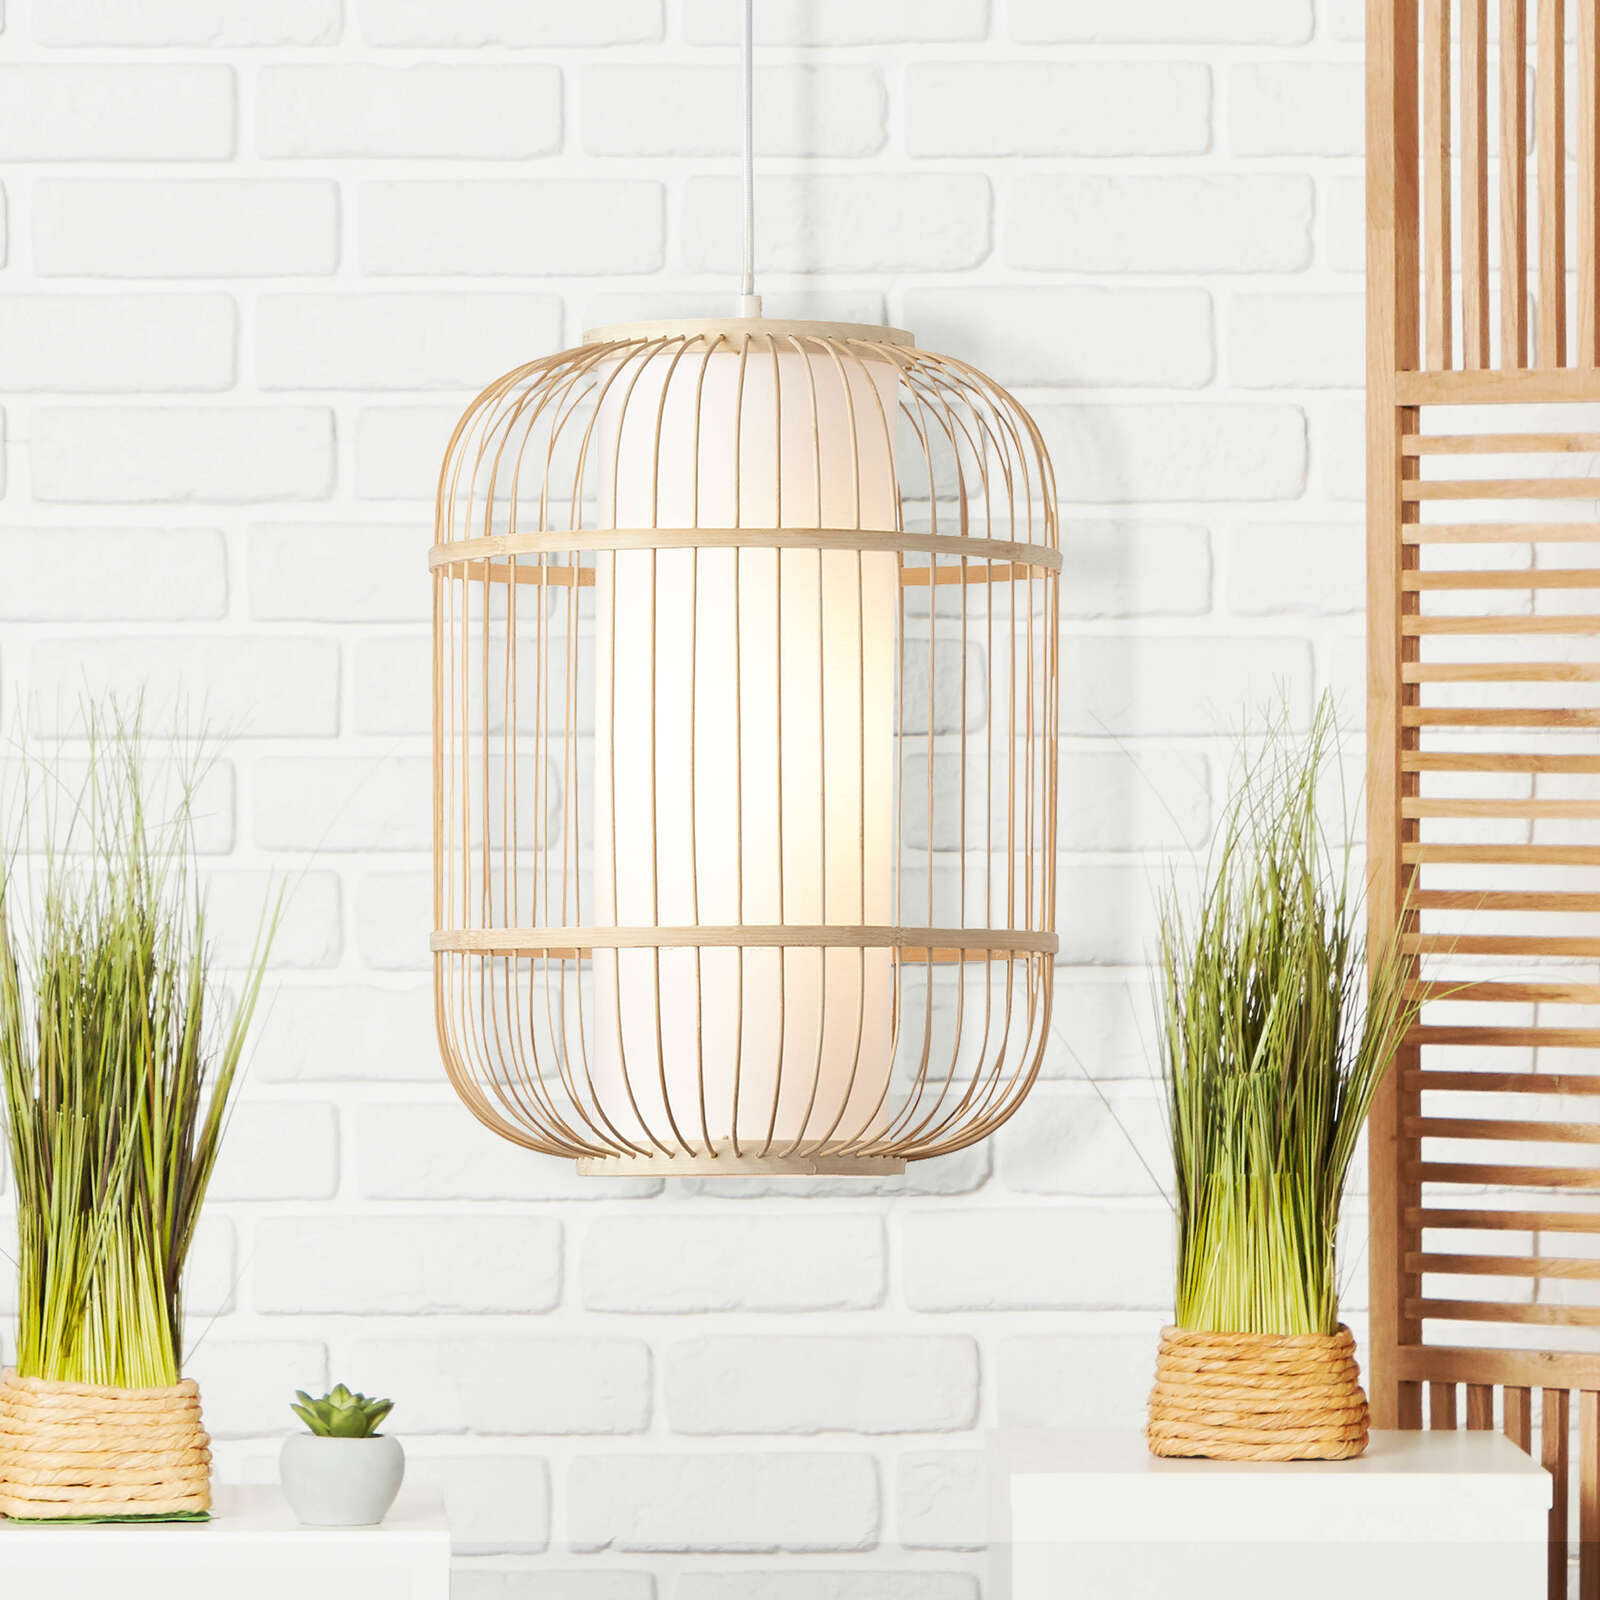             Lámpara colgante de bambú - Charlie 1 - Marrón
        